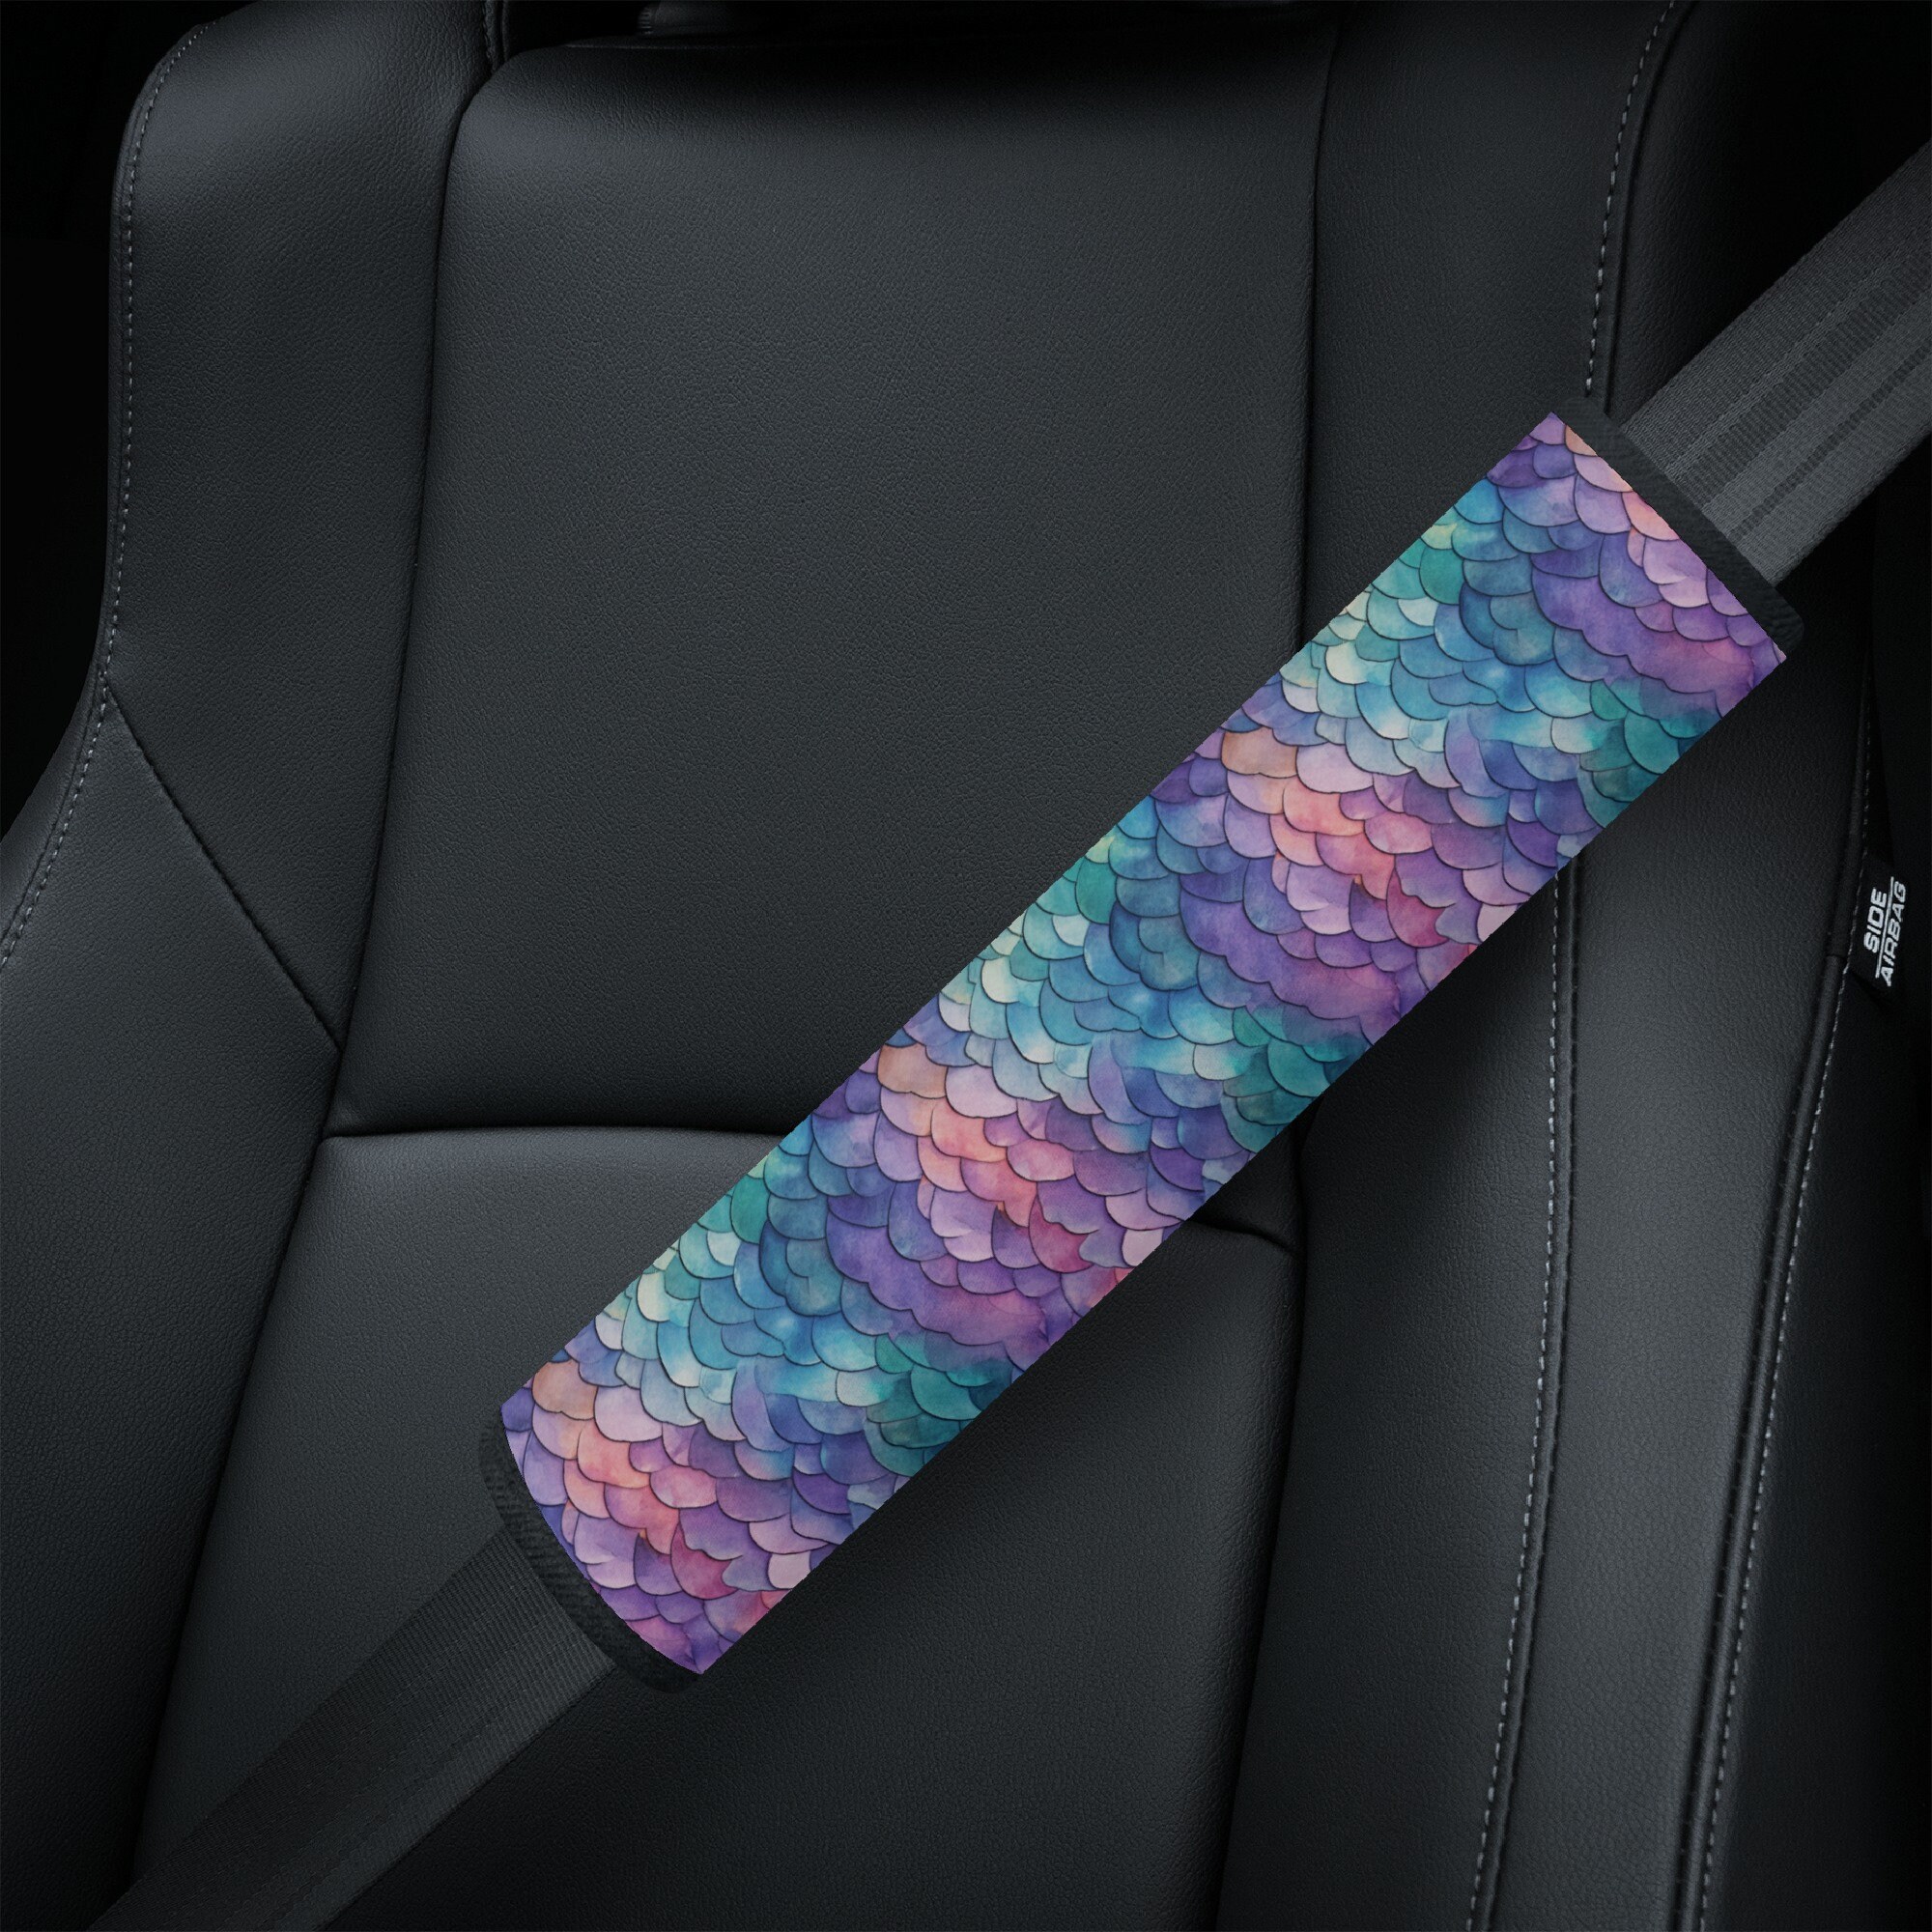 1/2x Car Seat Belt Cover Strap Pad Shoulder Comfort Cushion